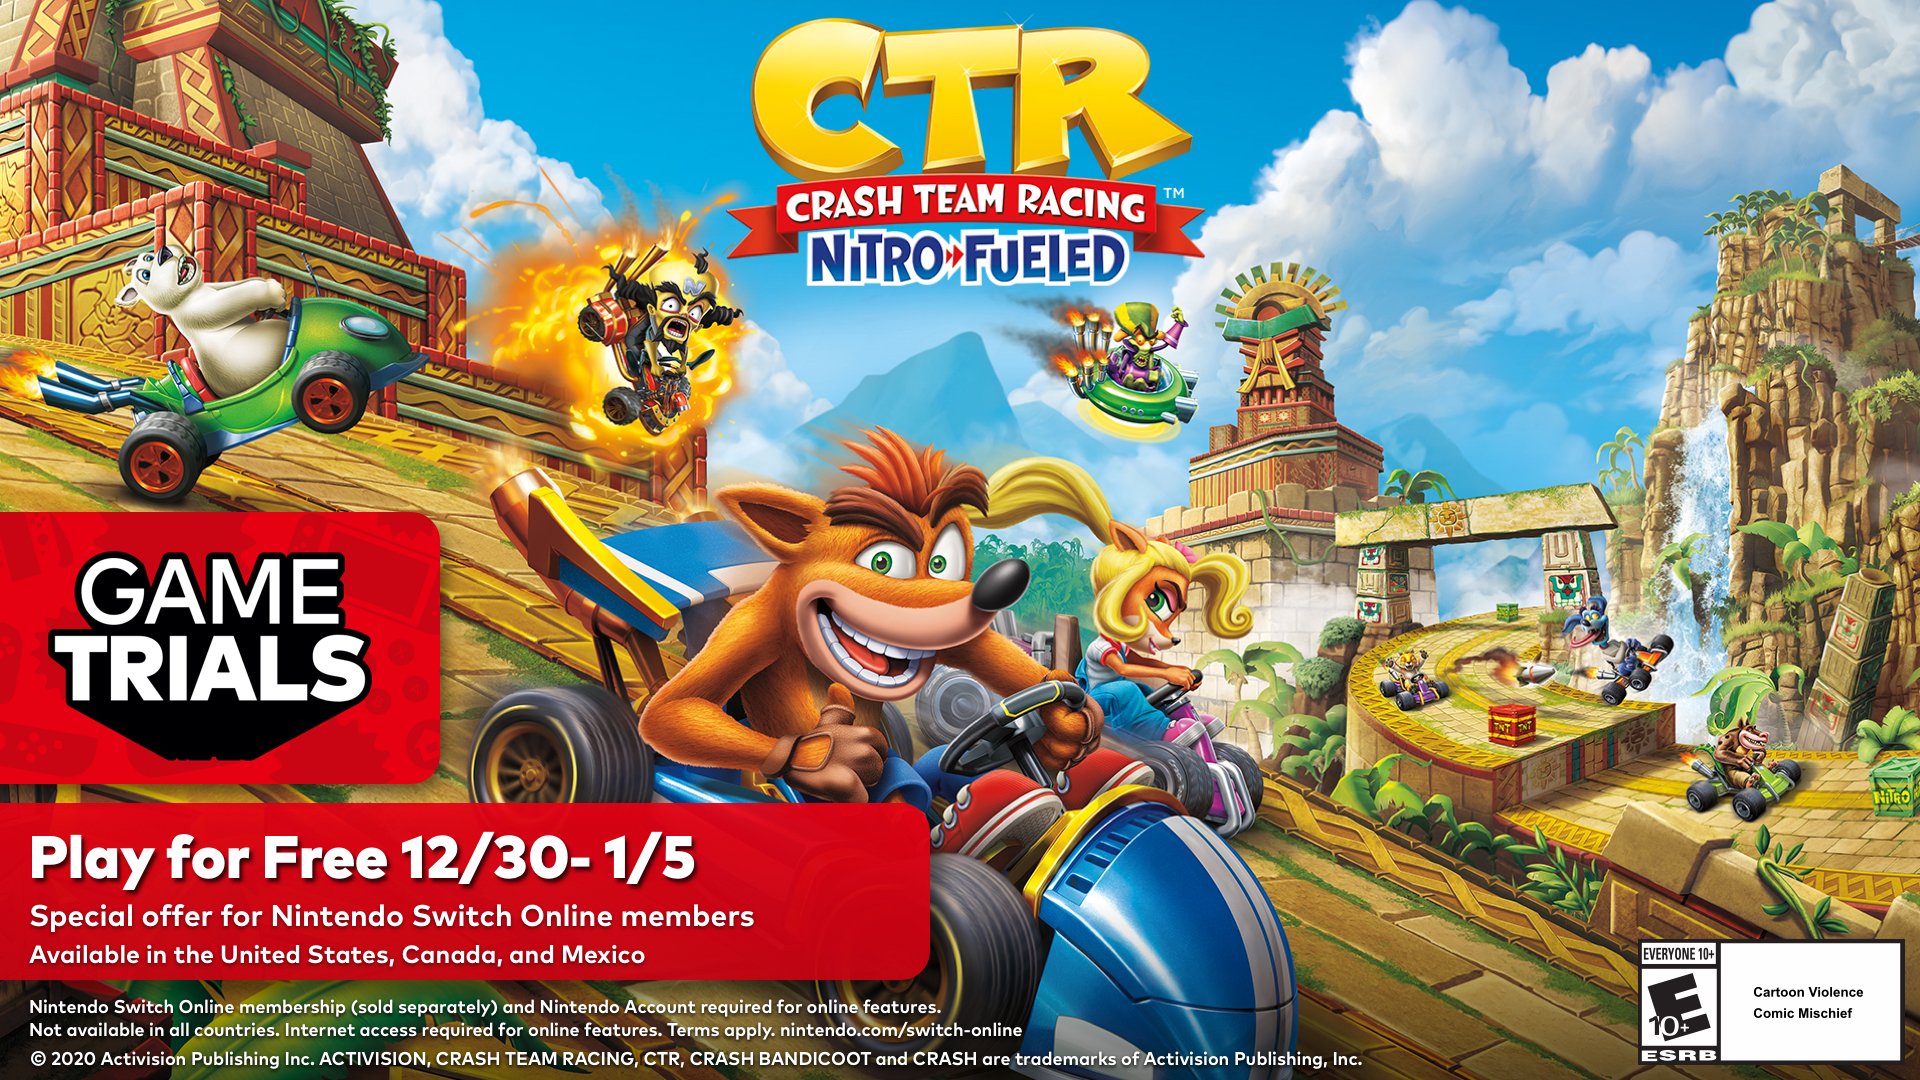 Crash Team Racing NitroFueled Nintendo Switch Online Game Trial will